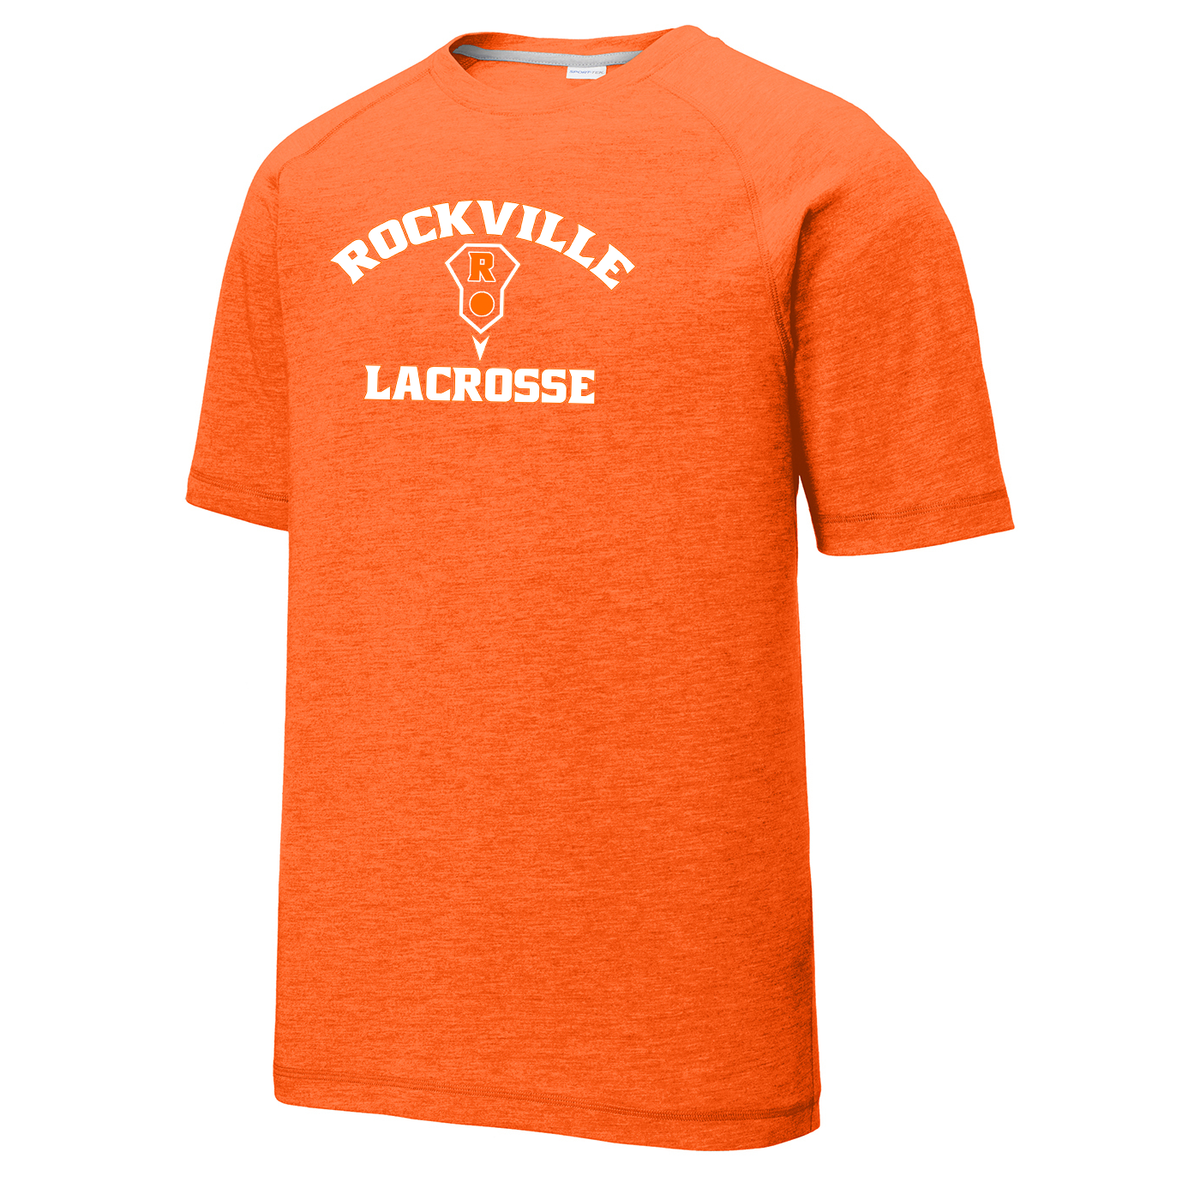 Rockville HS Girls Lacrosse Raglan CottonTouch Tee